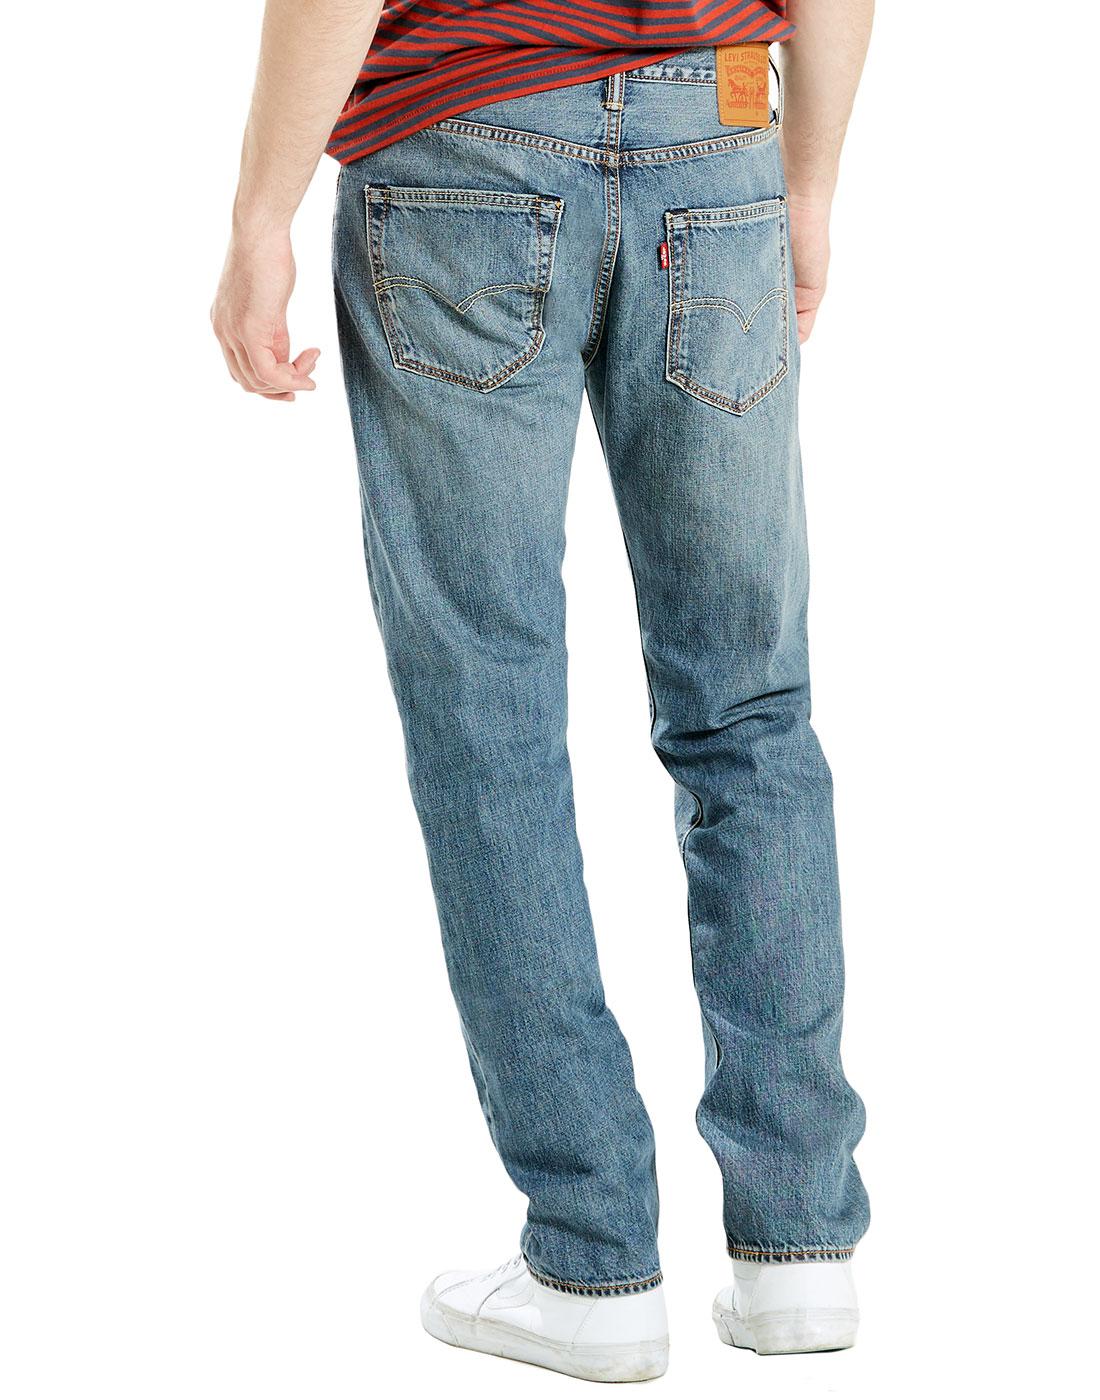 LEVI'S® 501 Retro Mod Original Fit Straight Jeans Pink Sand Cool